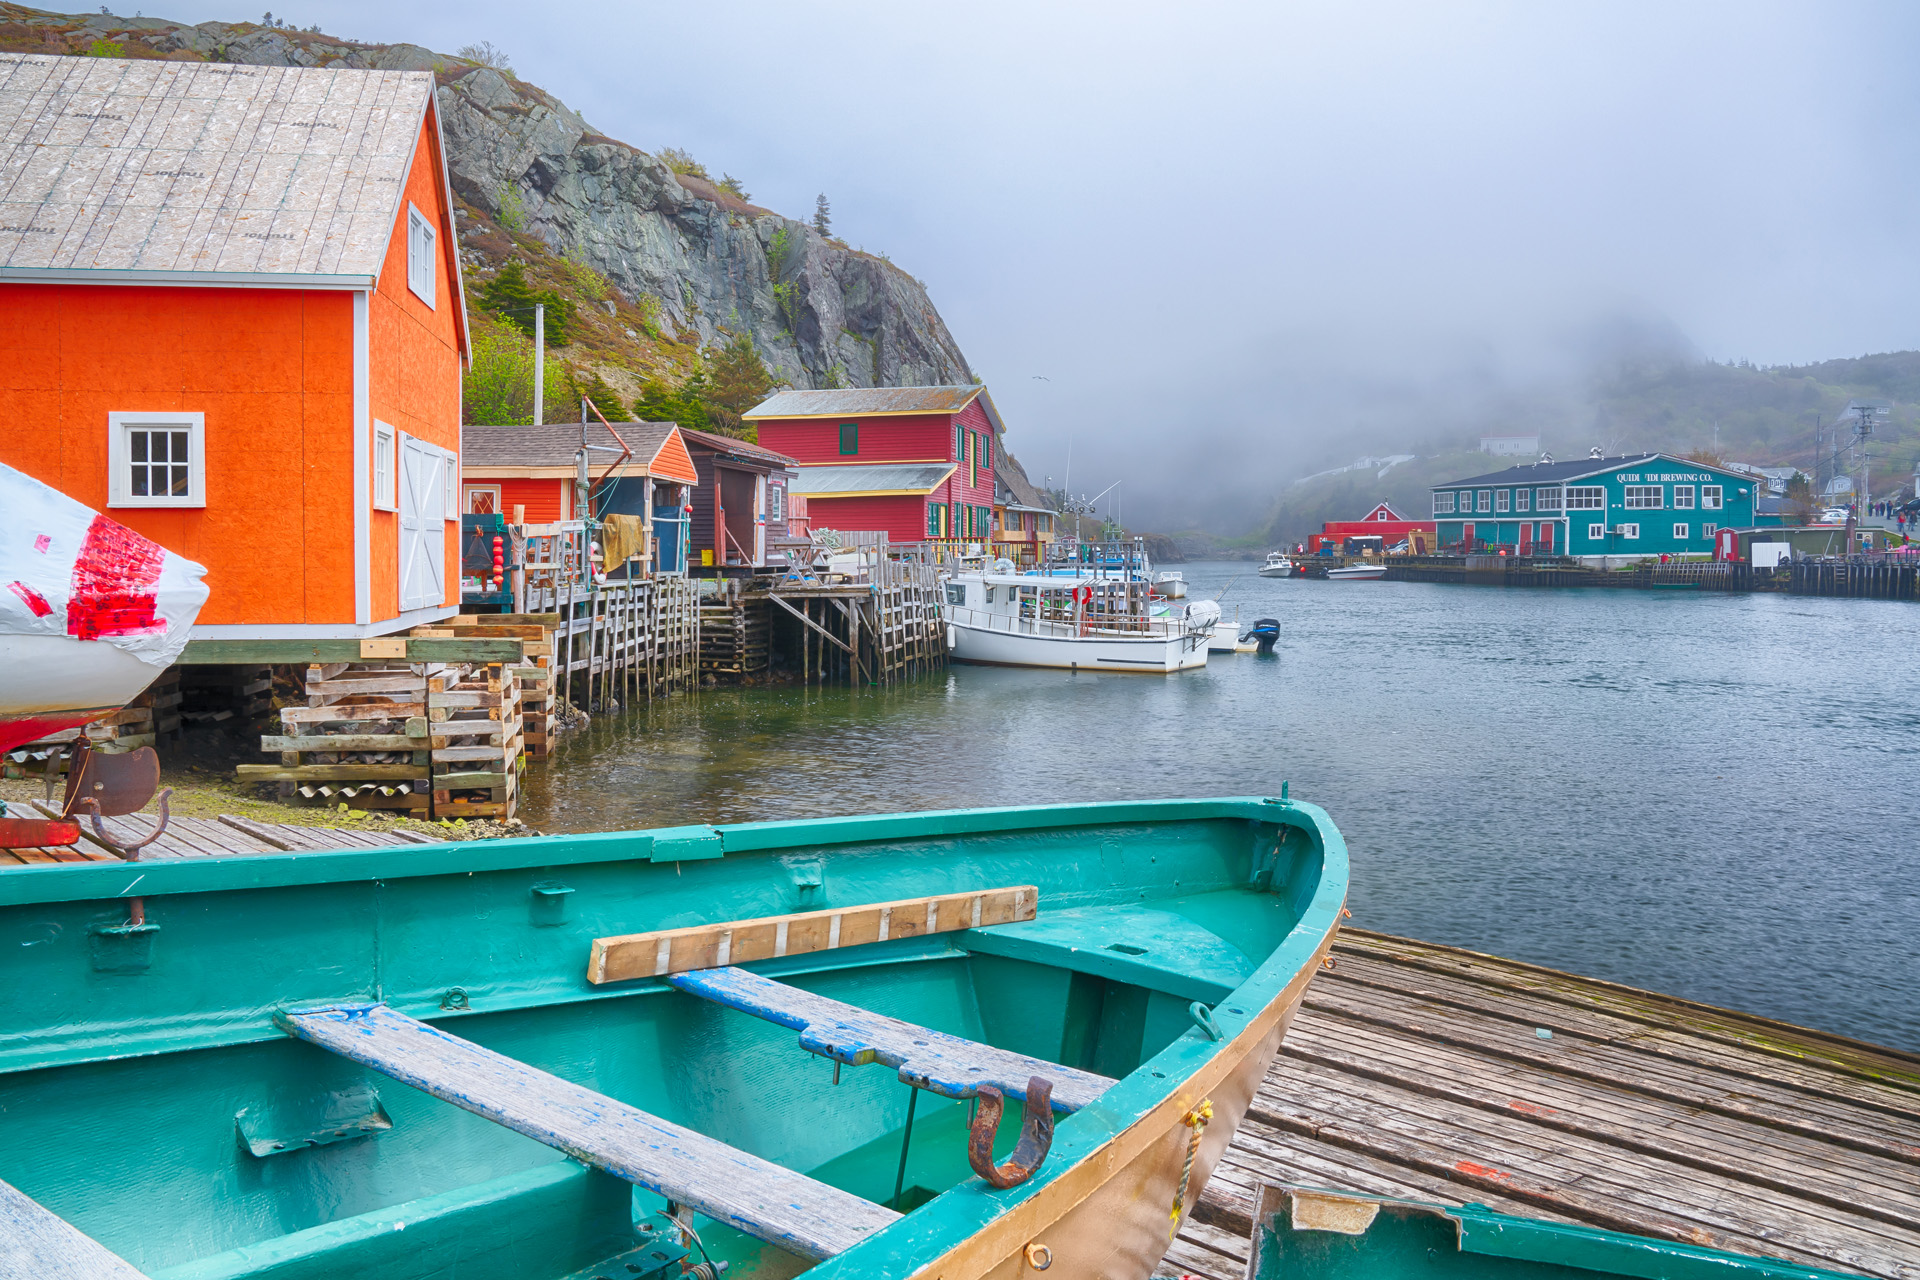 St John's, Newfoundland, CA - June 16, 2019: Historic old fishing village of Quidi Vidi in St John's, Newfoundland, Canada